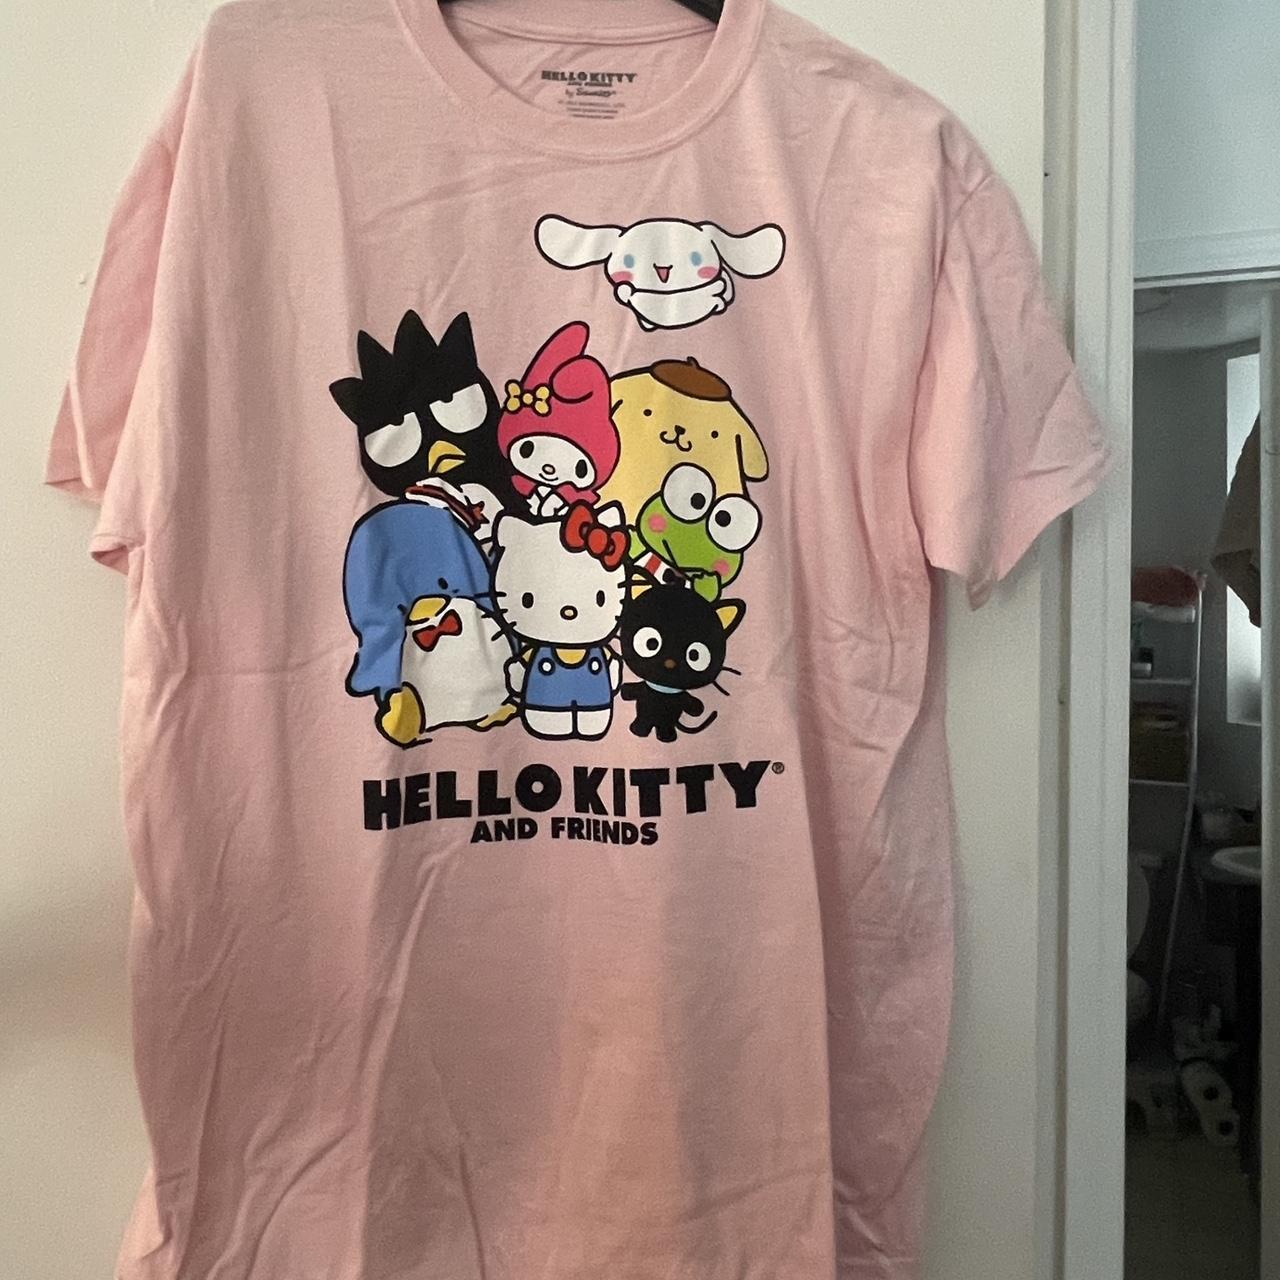 Hello kitty and friends pink t shirt #hellokitty... - Depop